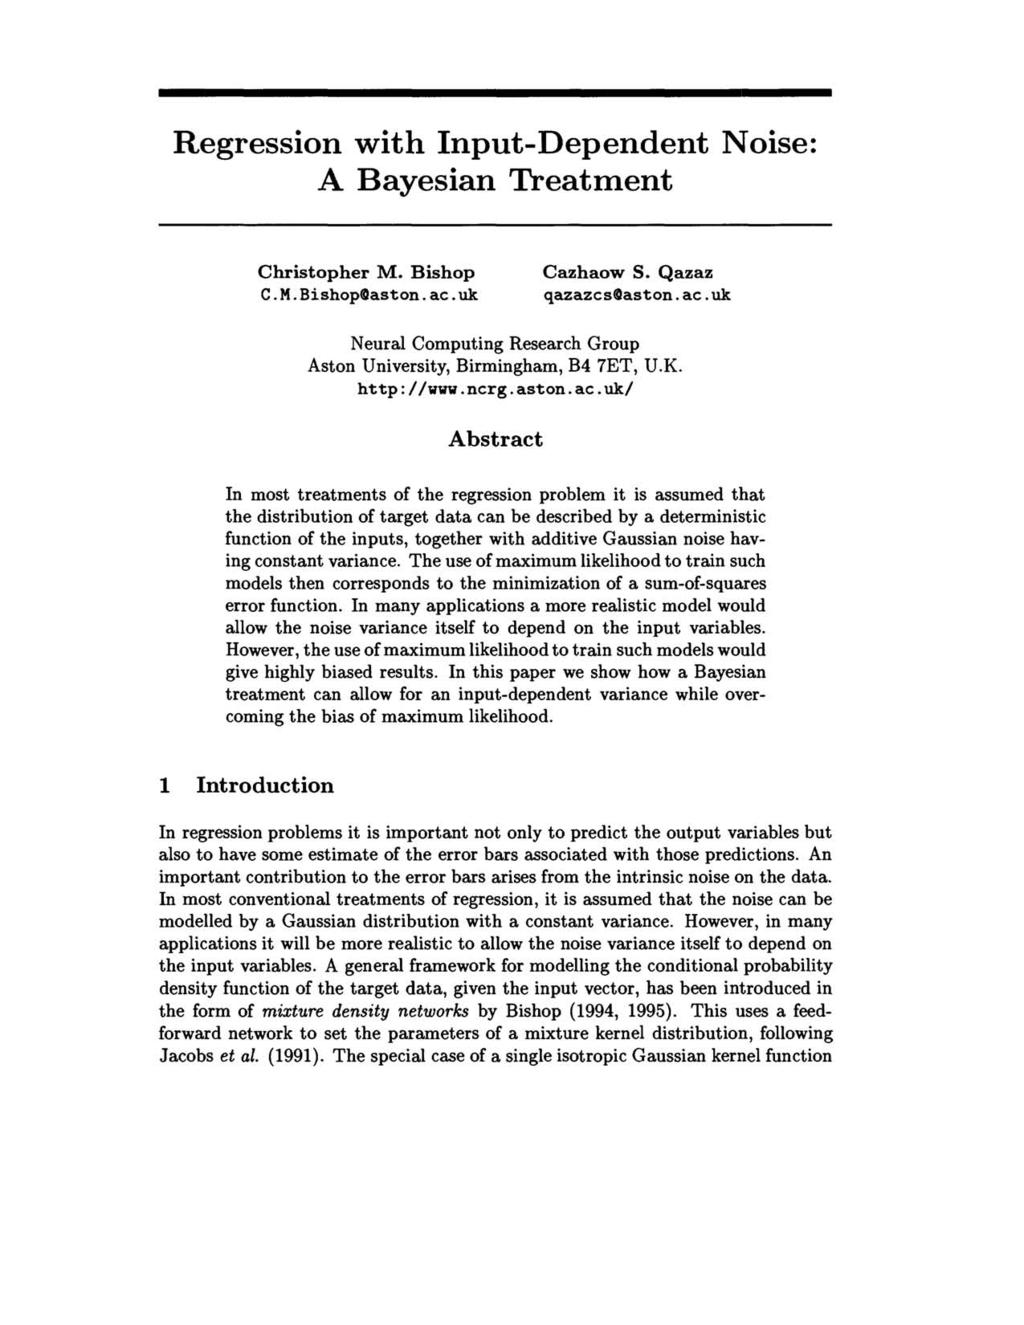 Regression with Input-Dependent oise: A Bayesian Treatment Christopher M. Bishop C.M.BishopGaston.ac.uk Cazhaow S. Qazaz qazazcsgaston.ac.uk eural Computing Research Group Aston University, Birmingham, B4 7ET, U.